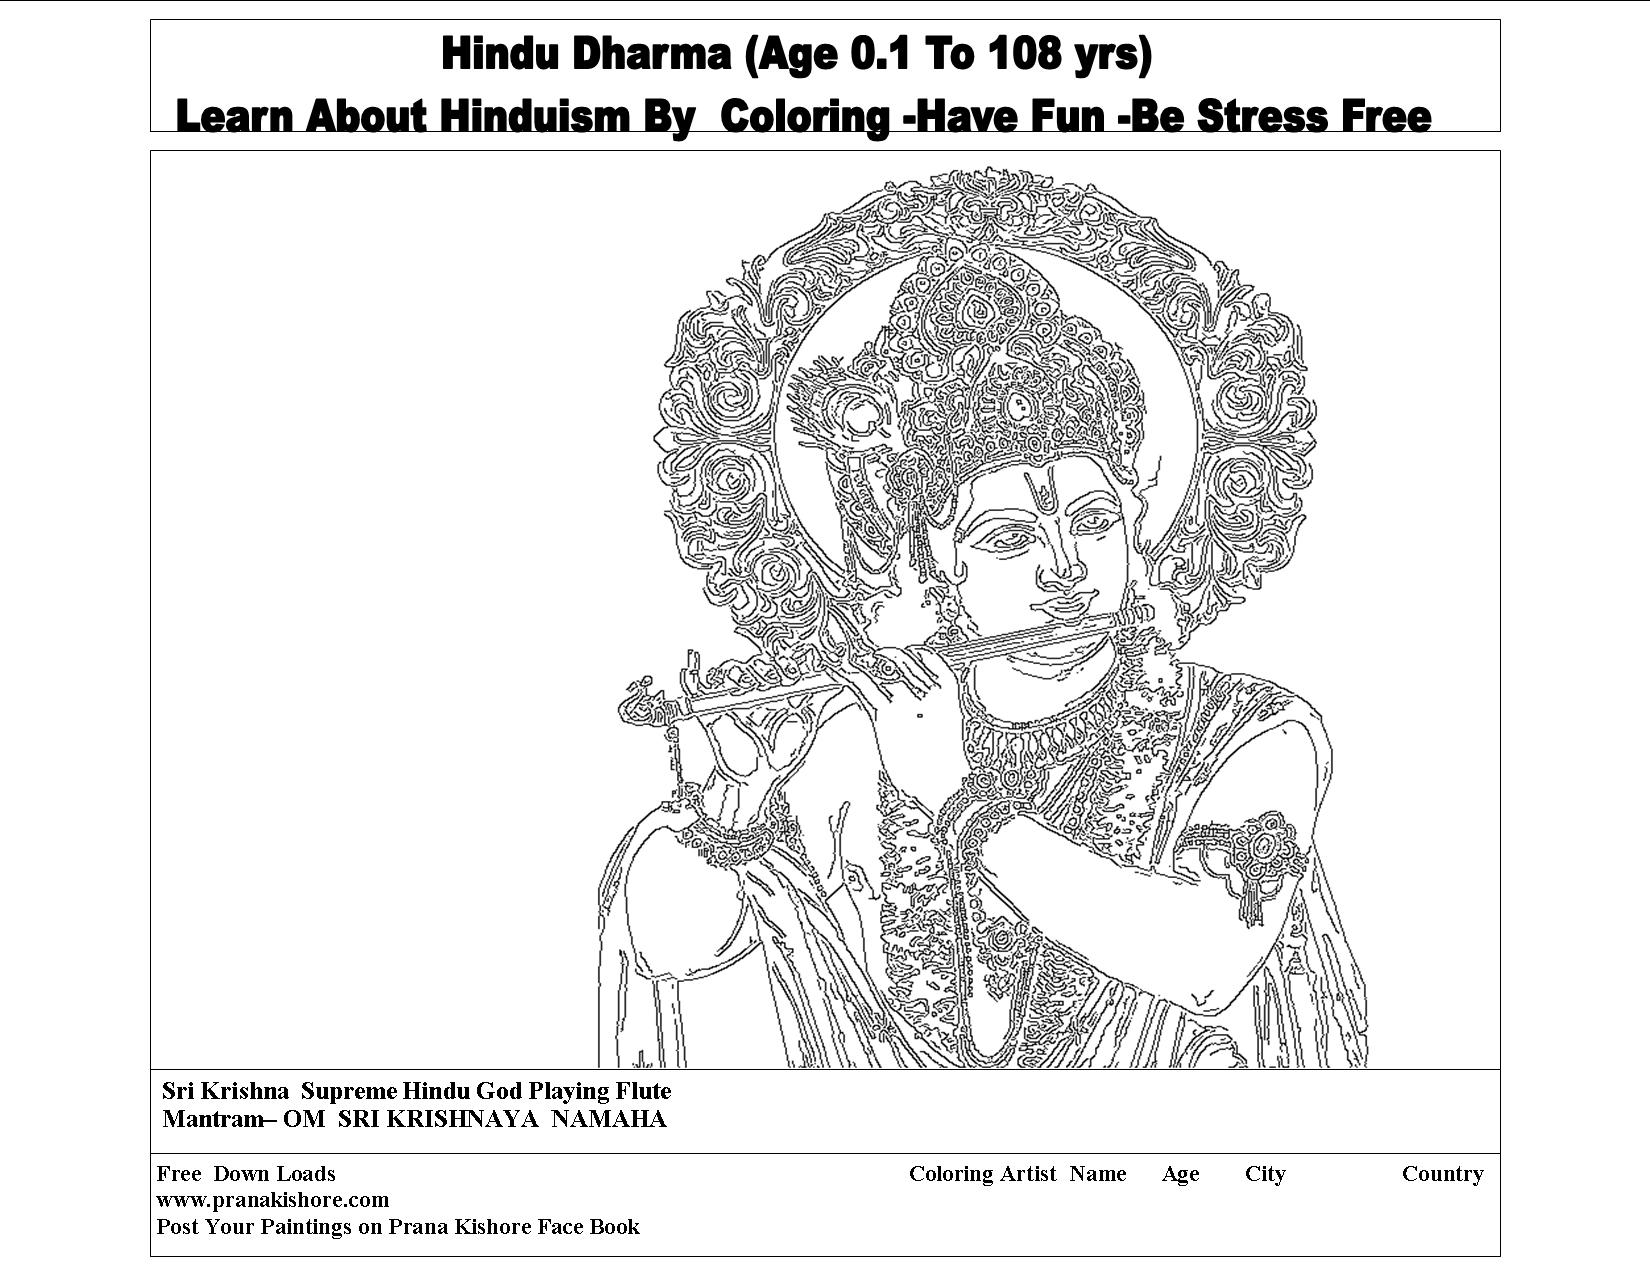 Hindu Dharma Coloring- Sri Krishna Playing Flute